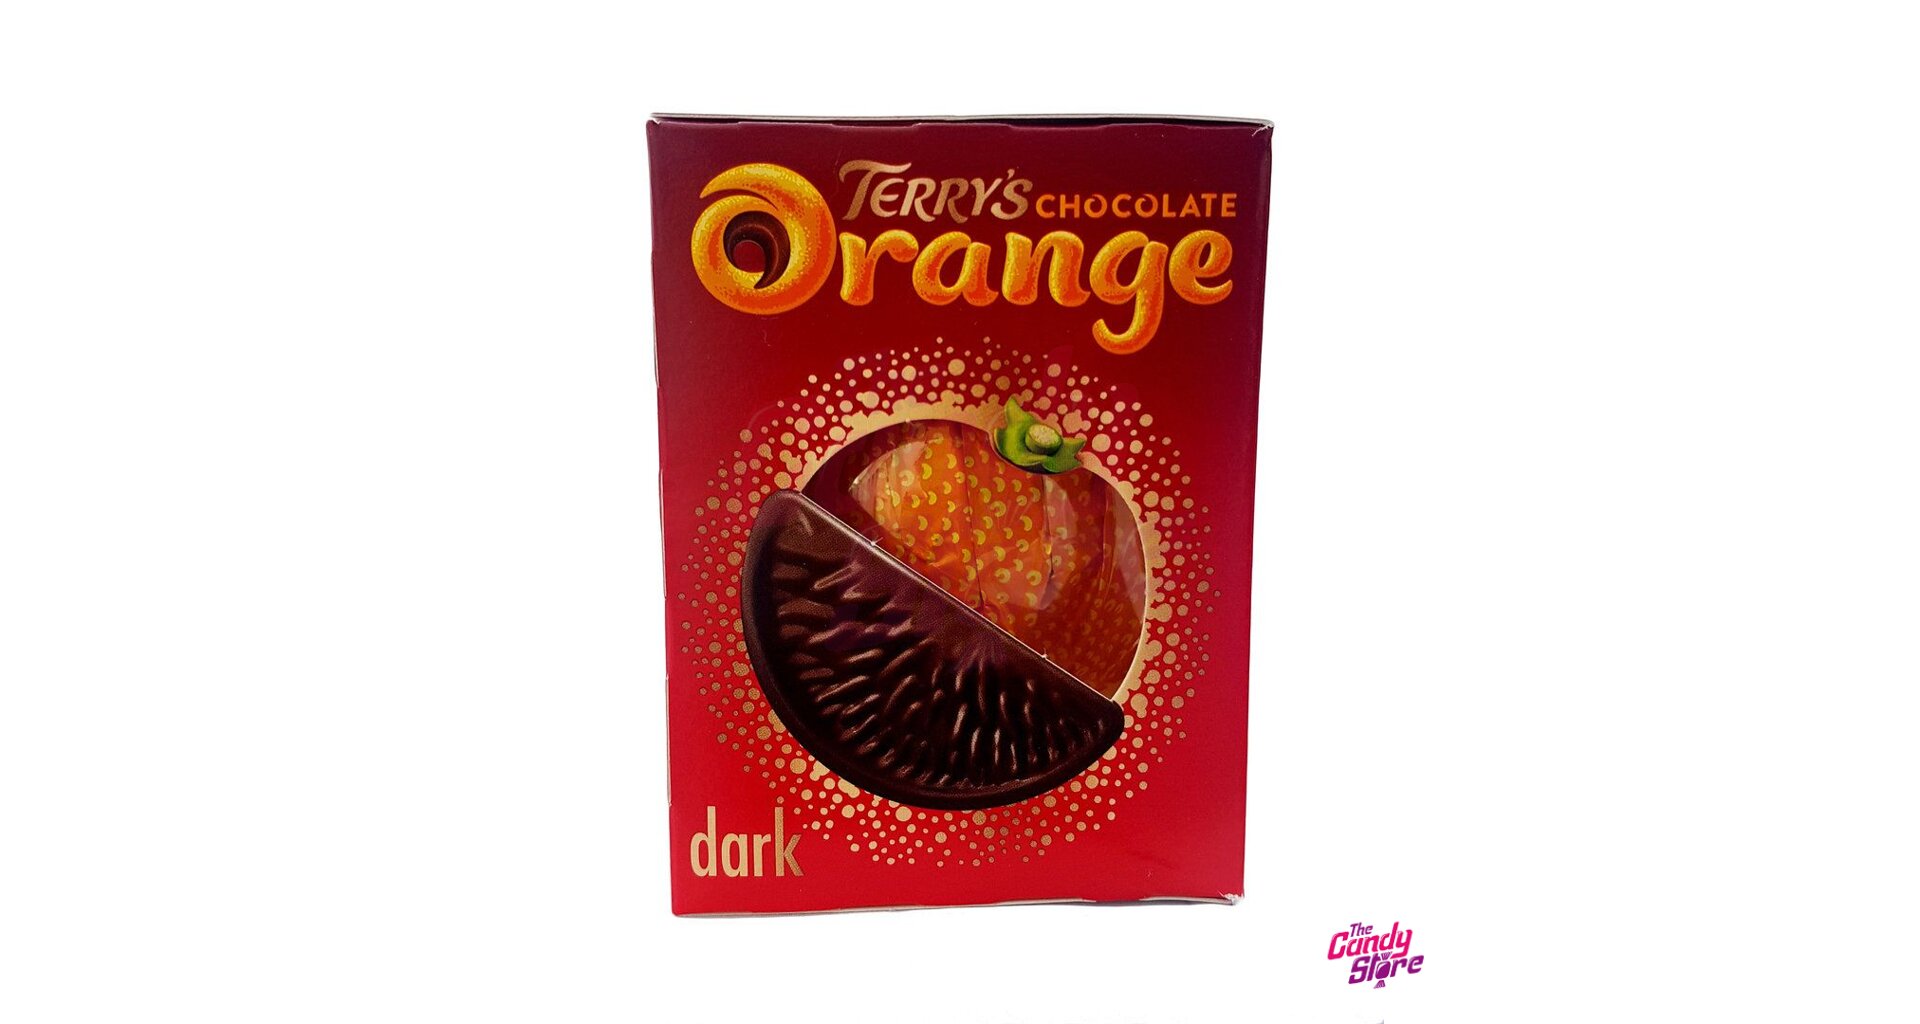 Terry's Dark Chocolate Orange